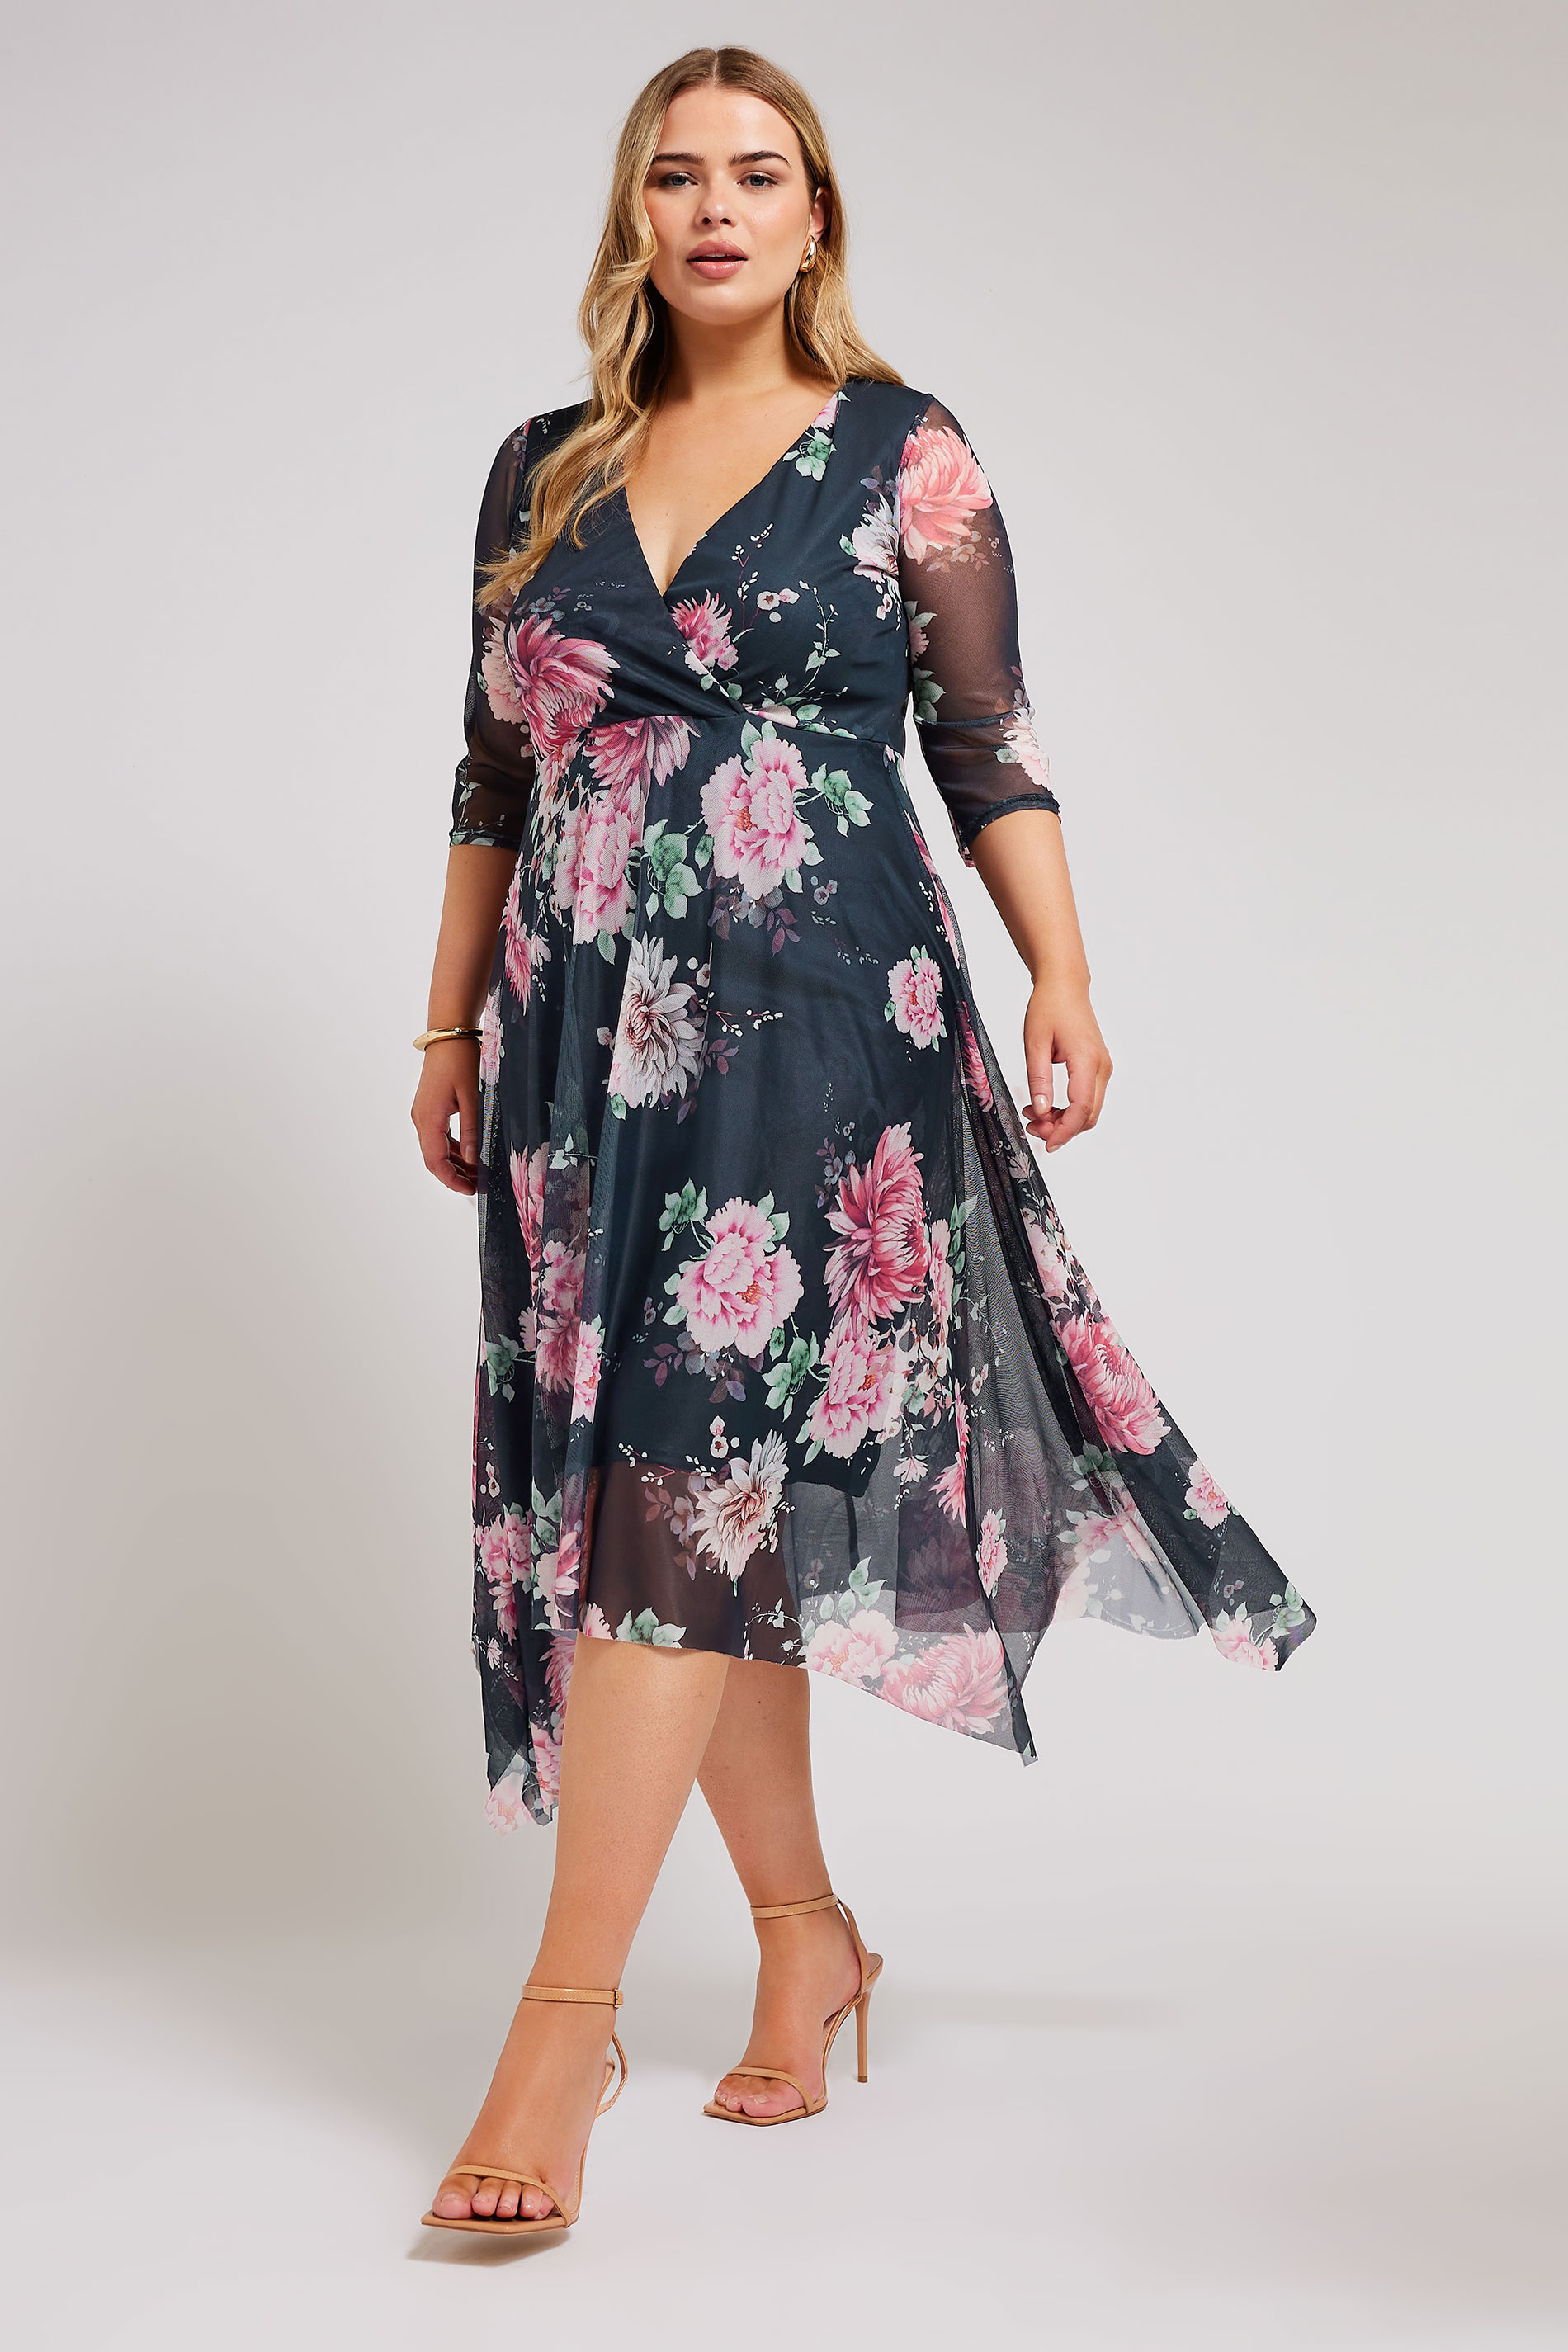 YOURS LONDON Plus Size Black Floral Print Wrap Midi Dress | Yours Clothing 1